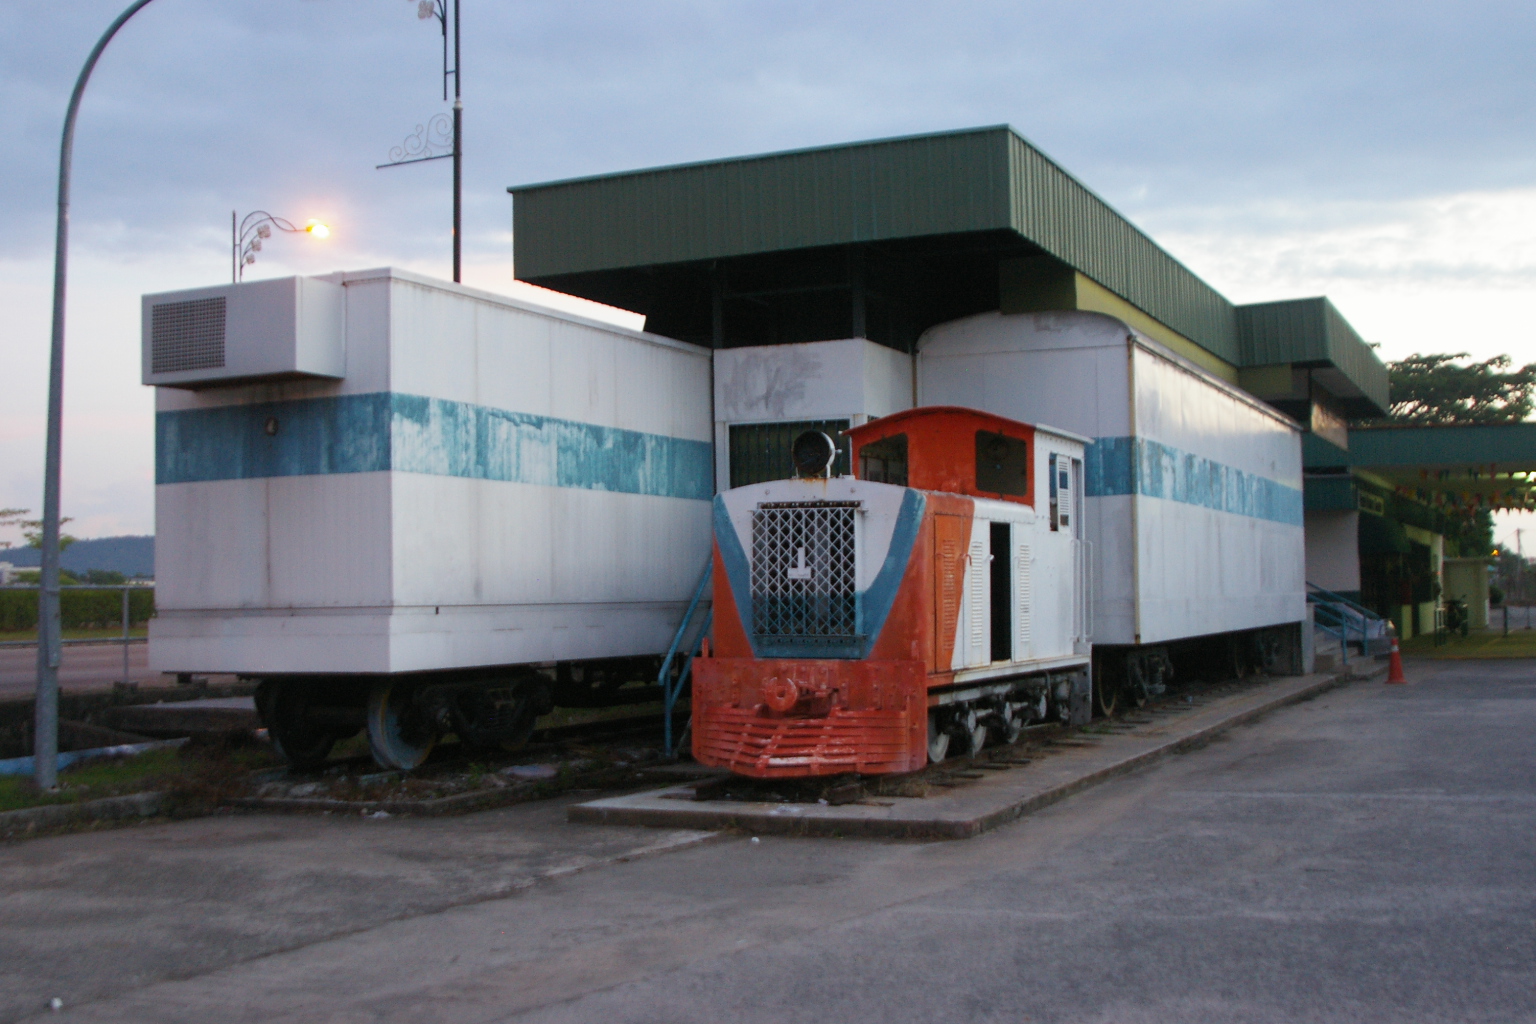 Sabah State Railway Used locomotive in Tanjung Aru Station, Kota Kinabalu, Malaysia April 30,2014